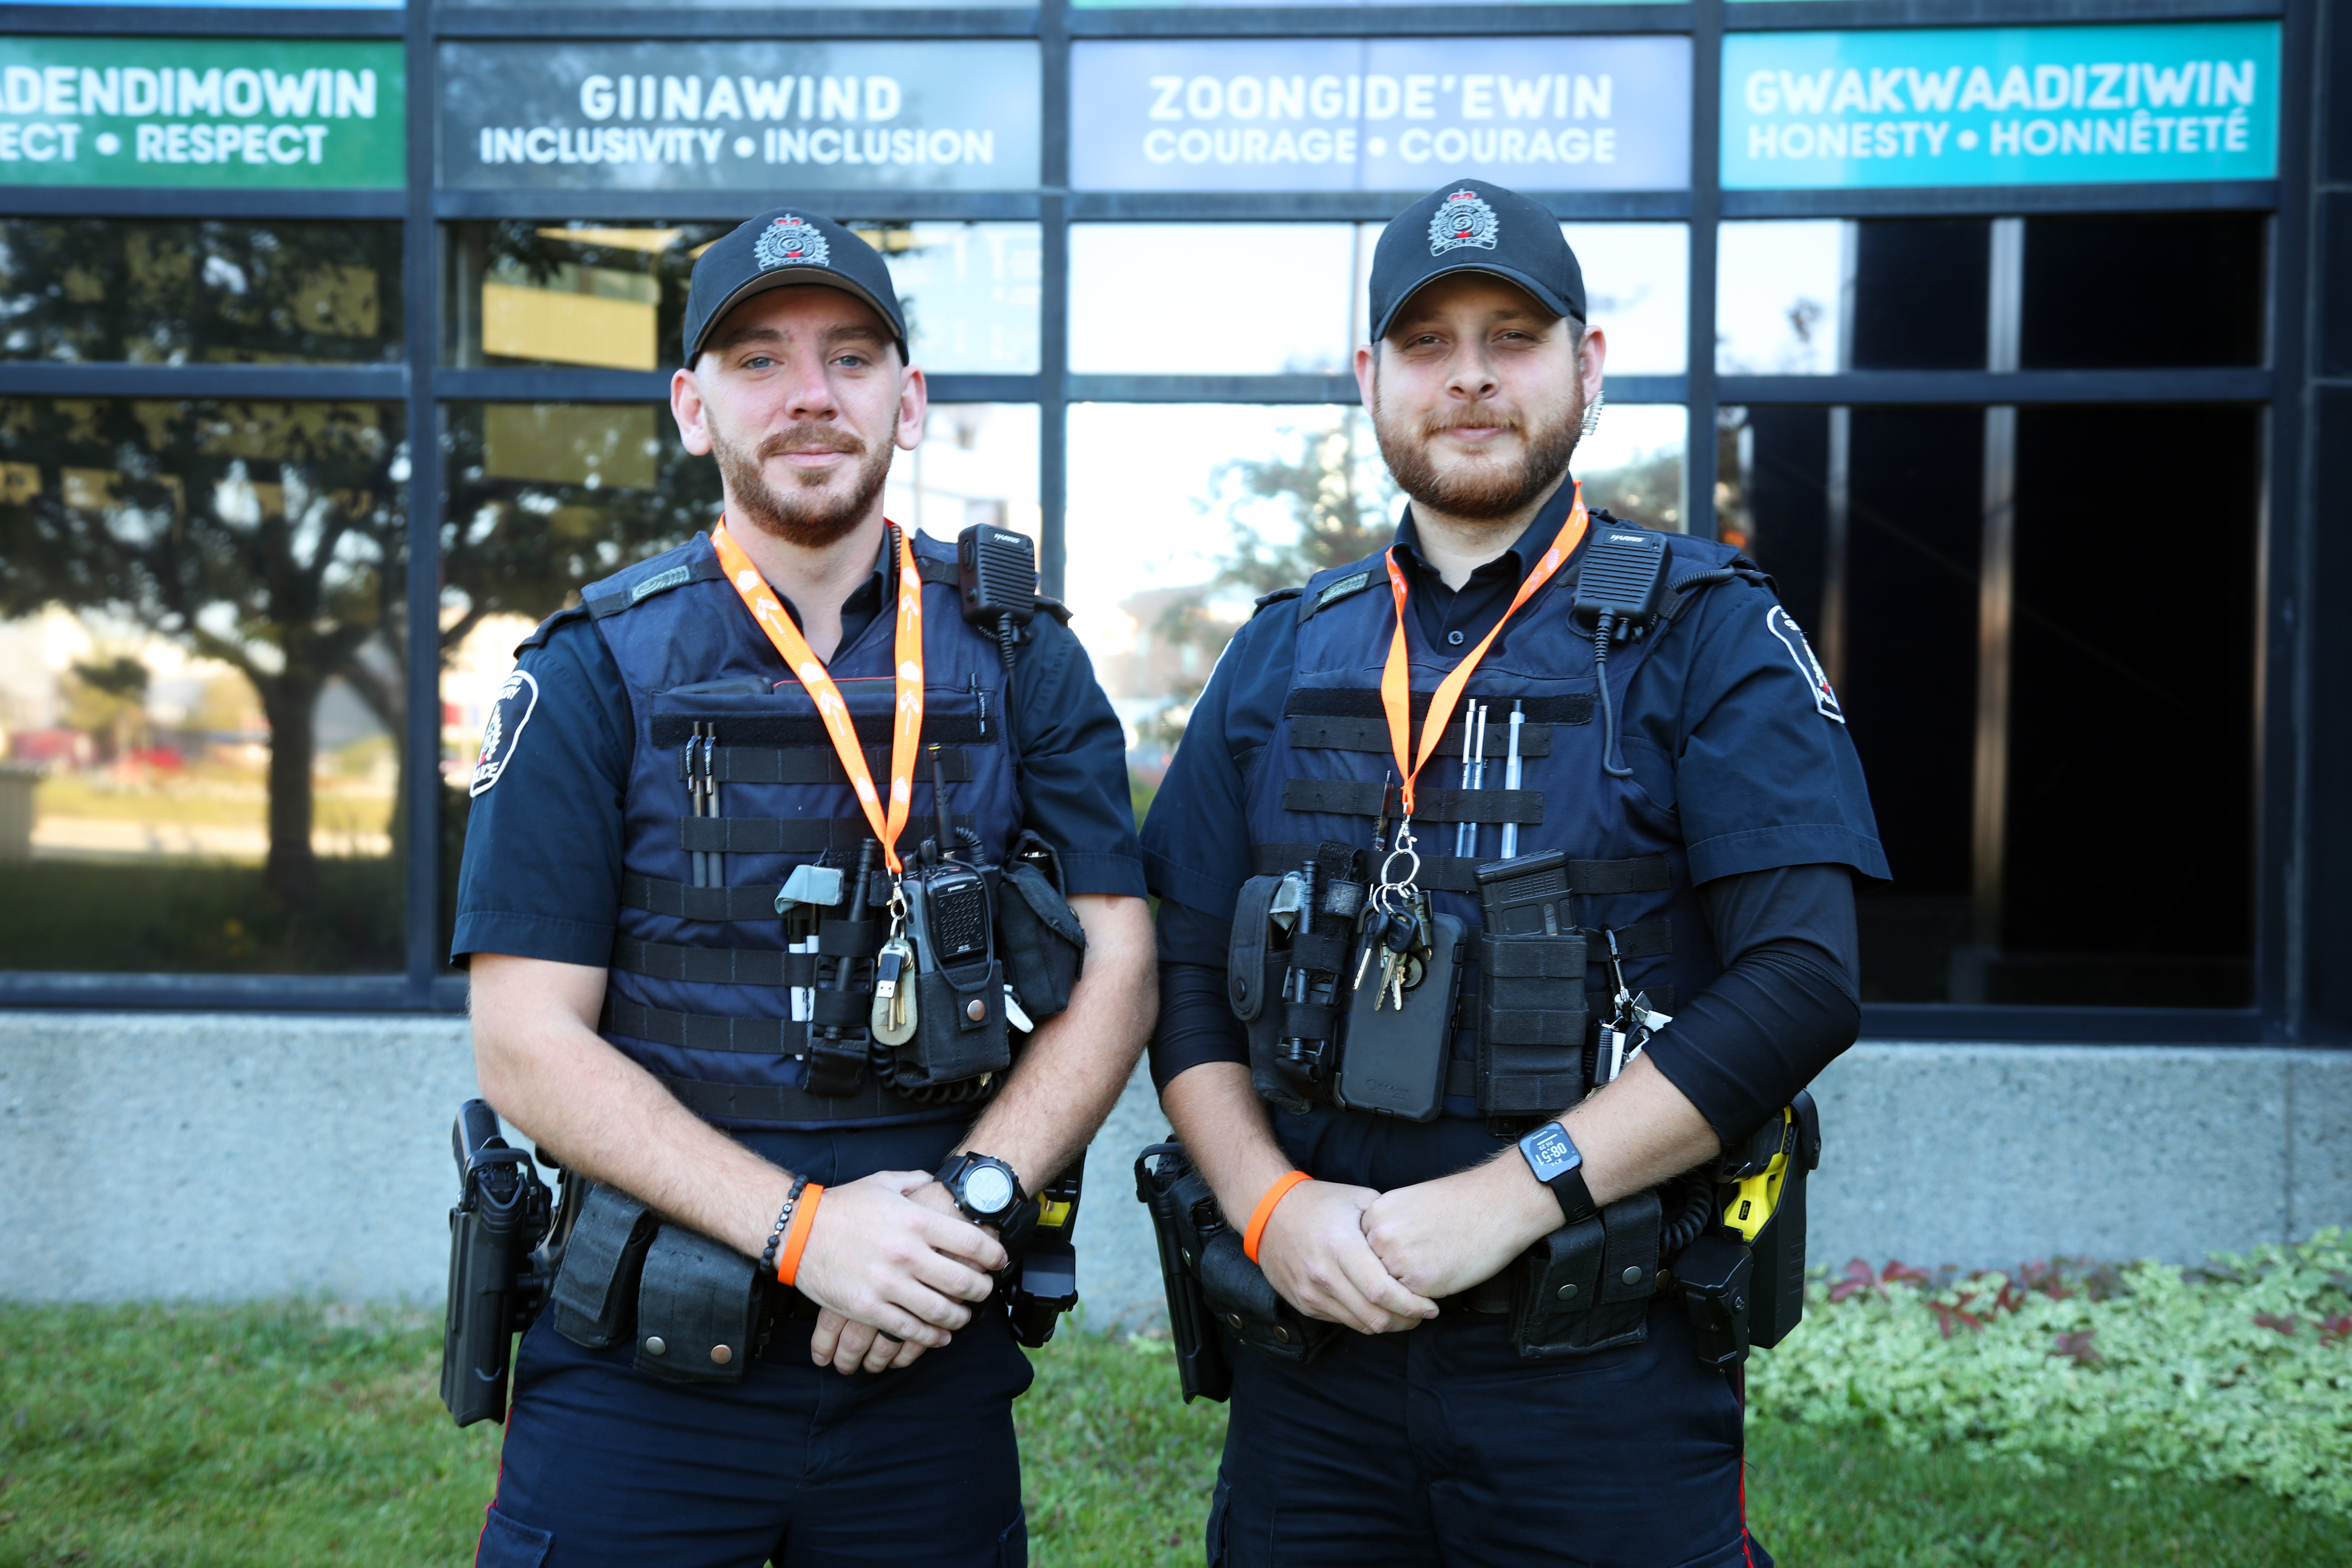 two officers in uniform wearing orange lanyards